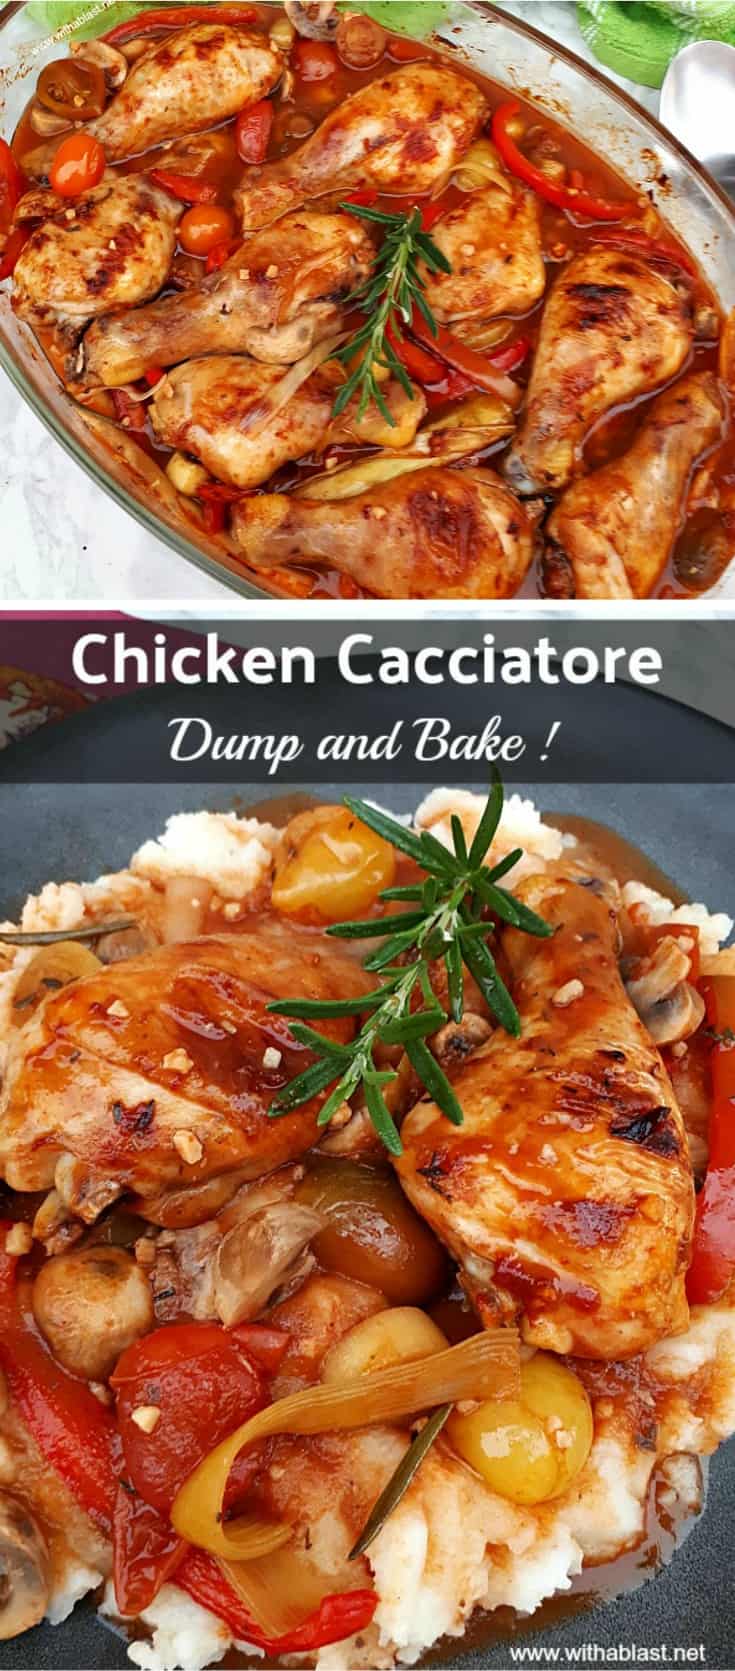 Chicken Cacciatore (Dump and Bake)